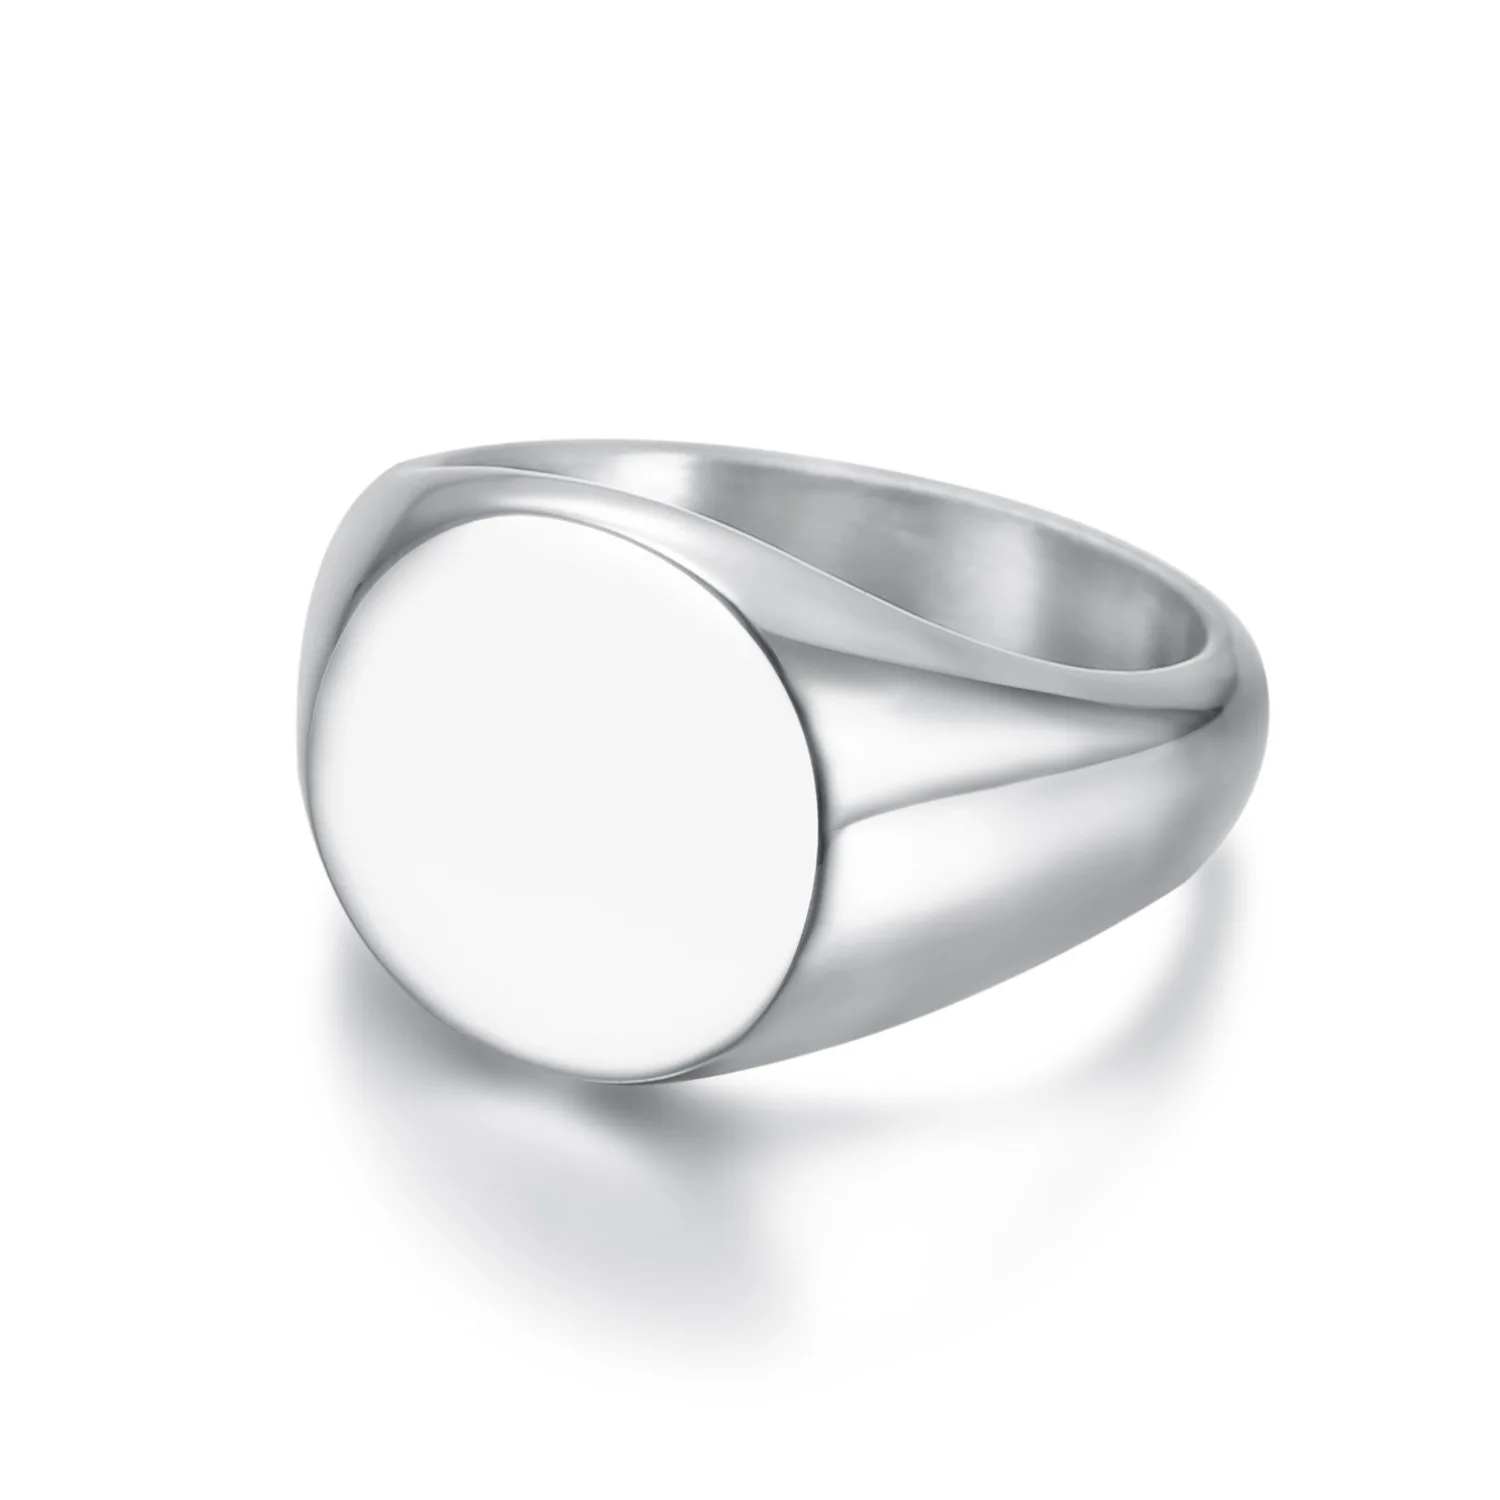 Top Quality Stainless Steel Ring Superman Rings 8Mm Black Tungsten Superhero Men Women Jewelry Gift Popular Titanium Brand Ring